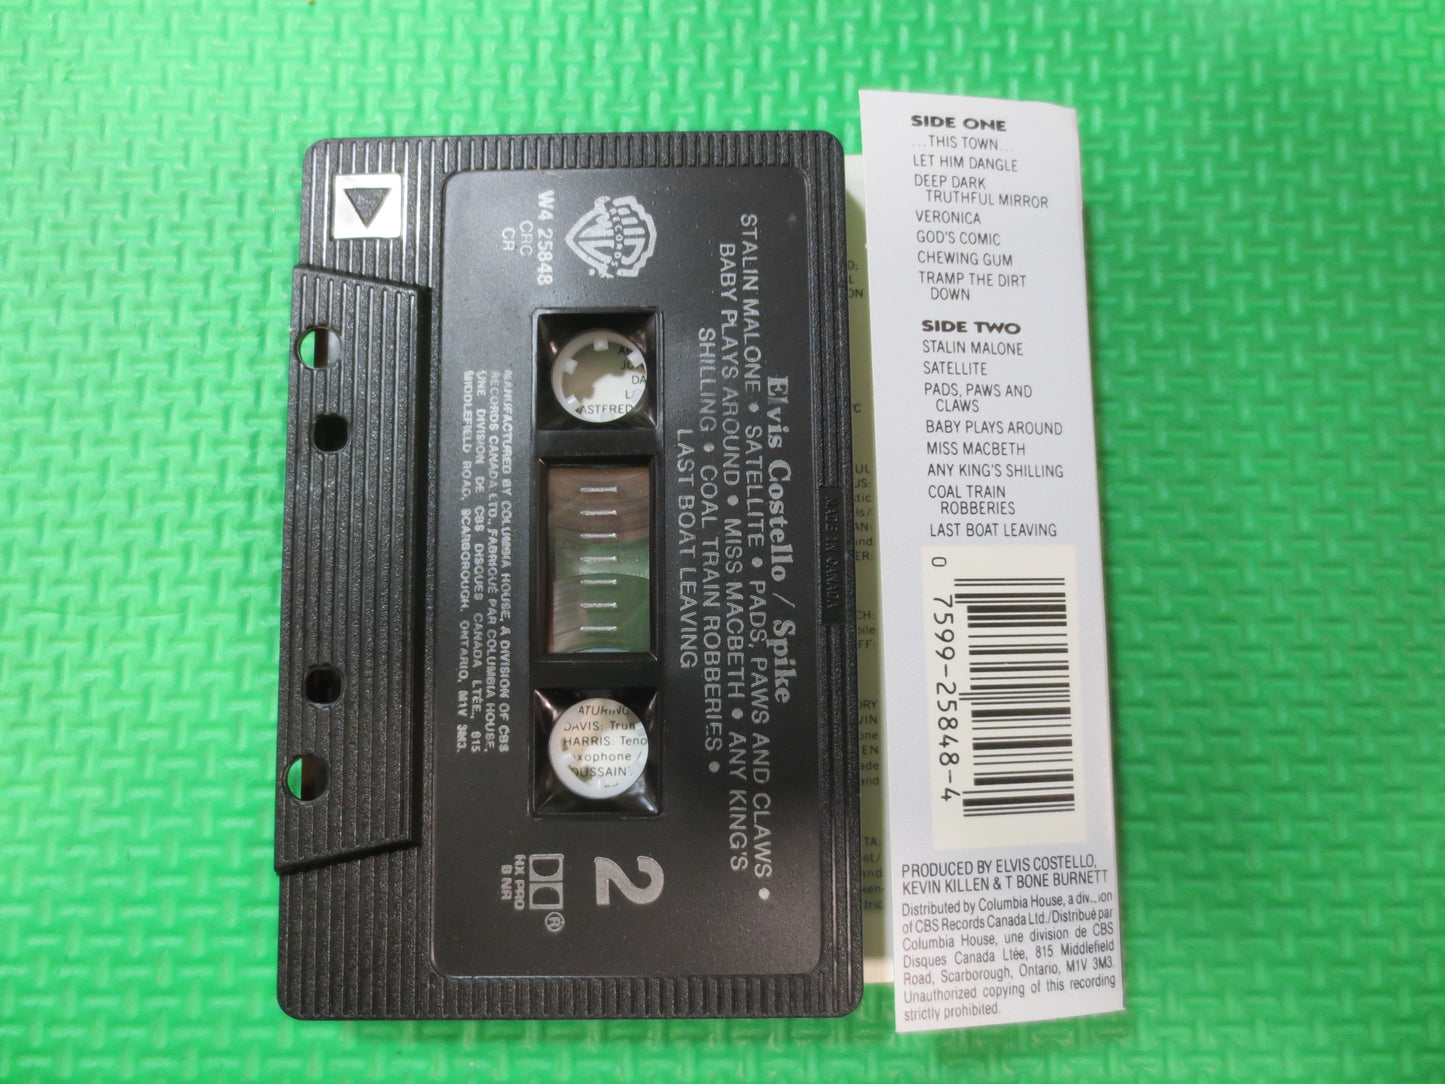 ELVIS COSTELLO Tape, SPIKE Tape, Elvis Costello Album, Elvis Costello Music, Tape Cassette, Rock Cassette, 1989 Cassette